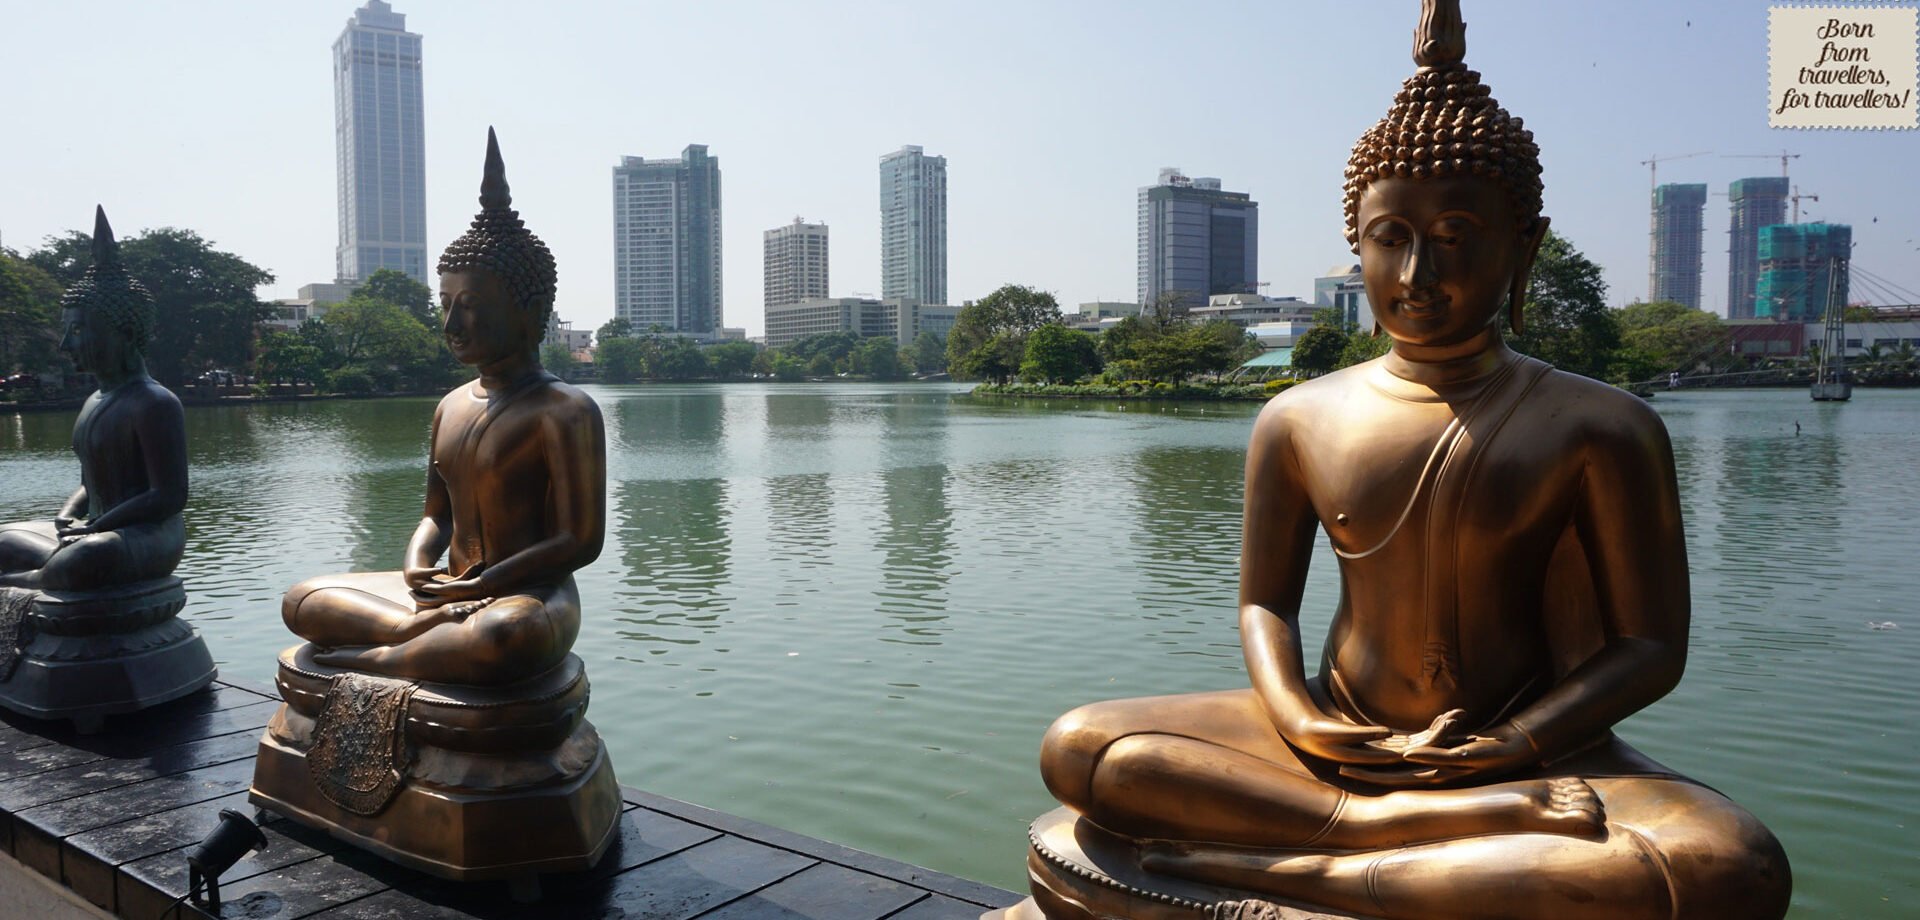 14. Sri Lanka, Buddha statues at Gangaramaya Temple, Colombo